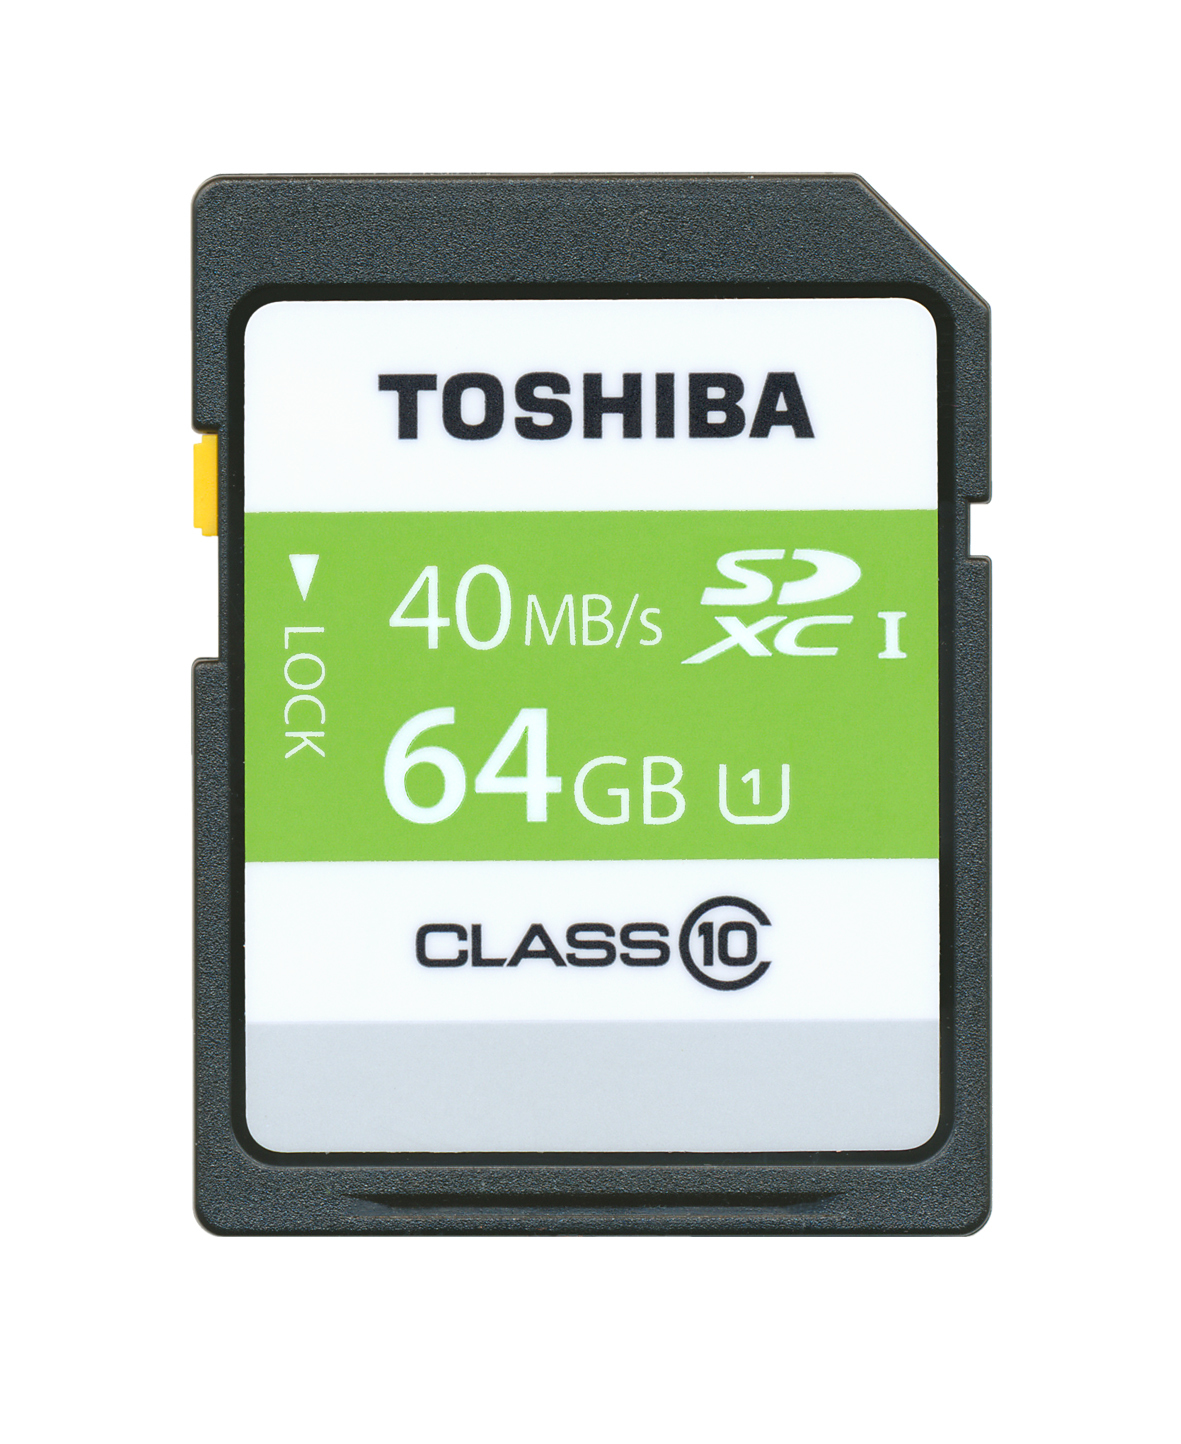 Toshiba Sd 64gb Uhs I U1